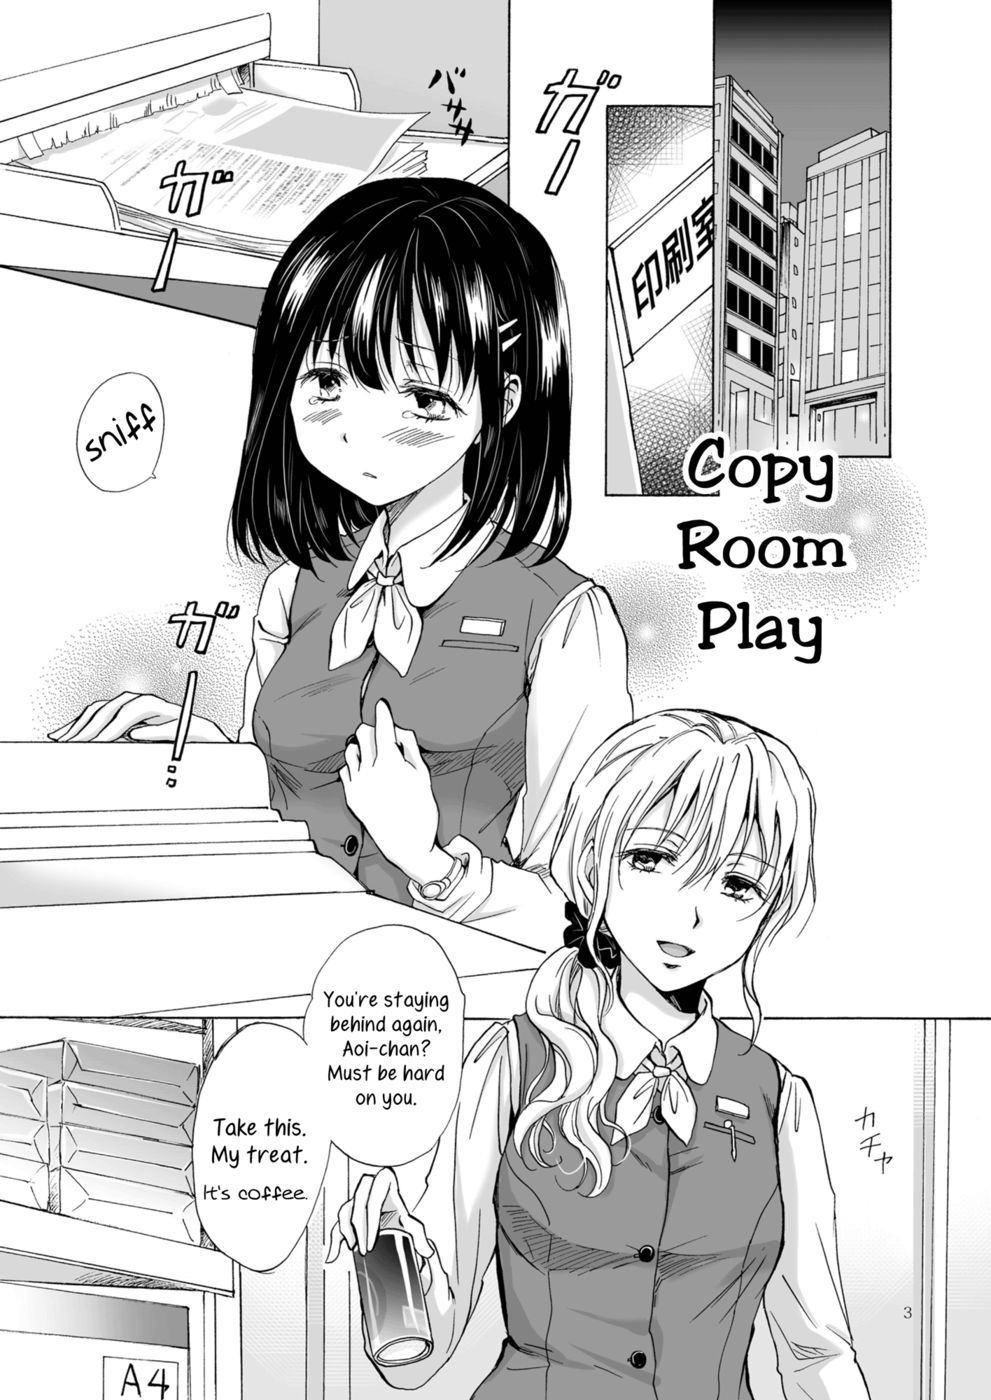 991px x 1400px - Copy Room Play 1 | Naughty Hentai Lesbian Manga Aoi-chan Documents